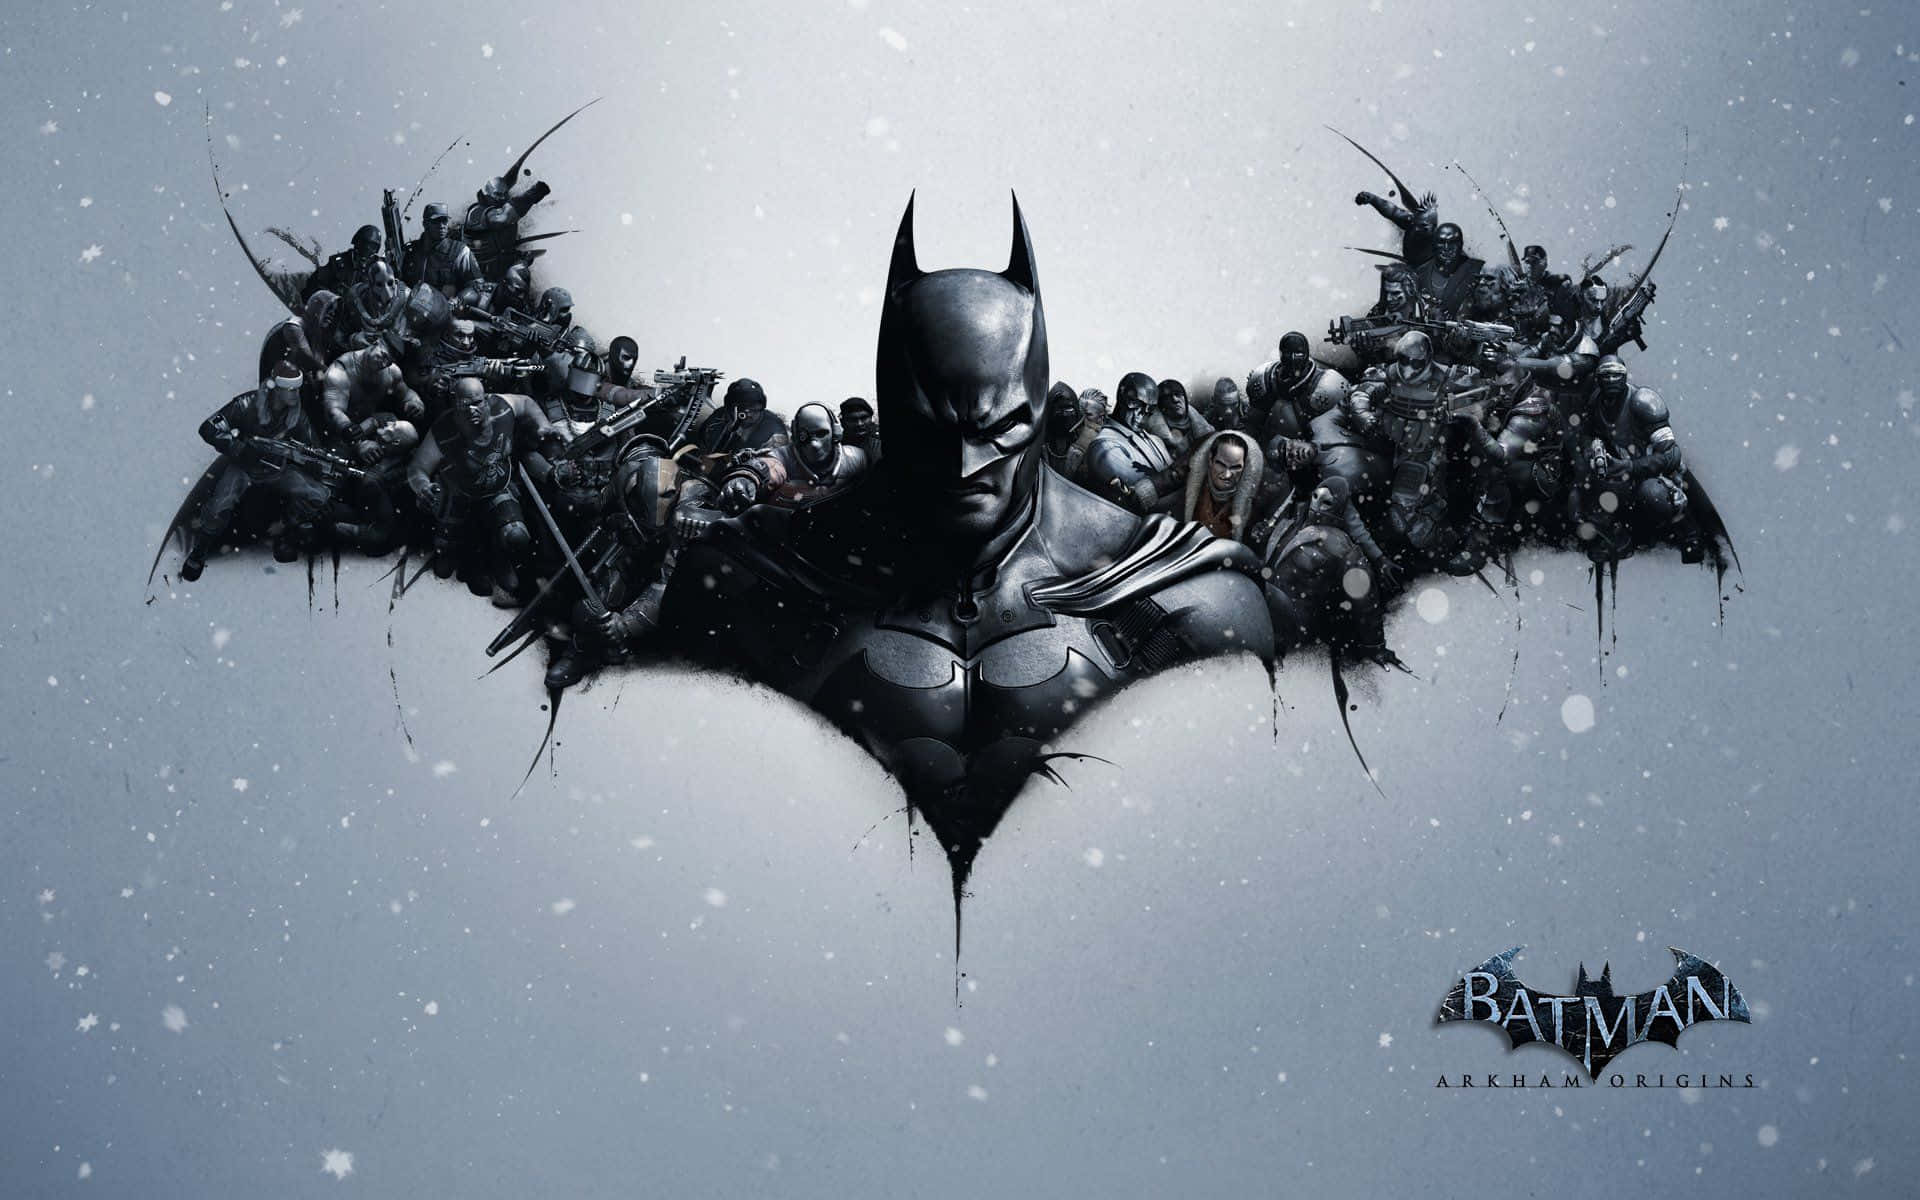 100+] Batman Arkham Knight Wallpapers